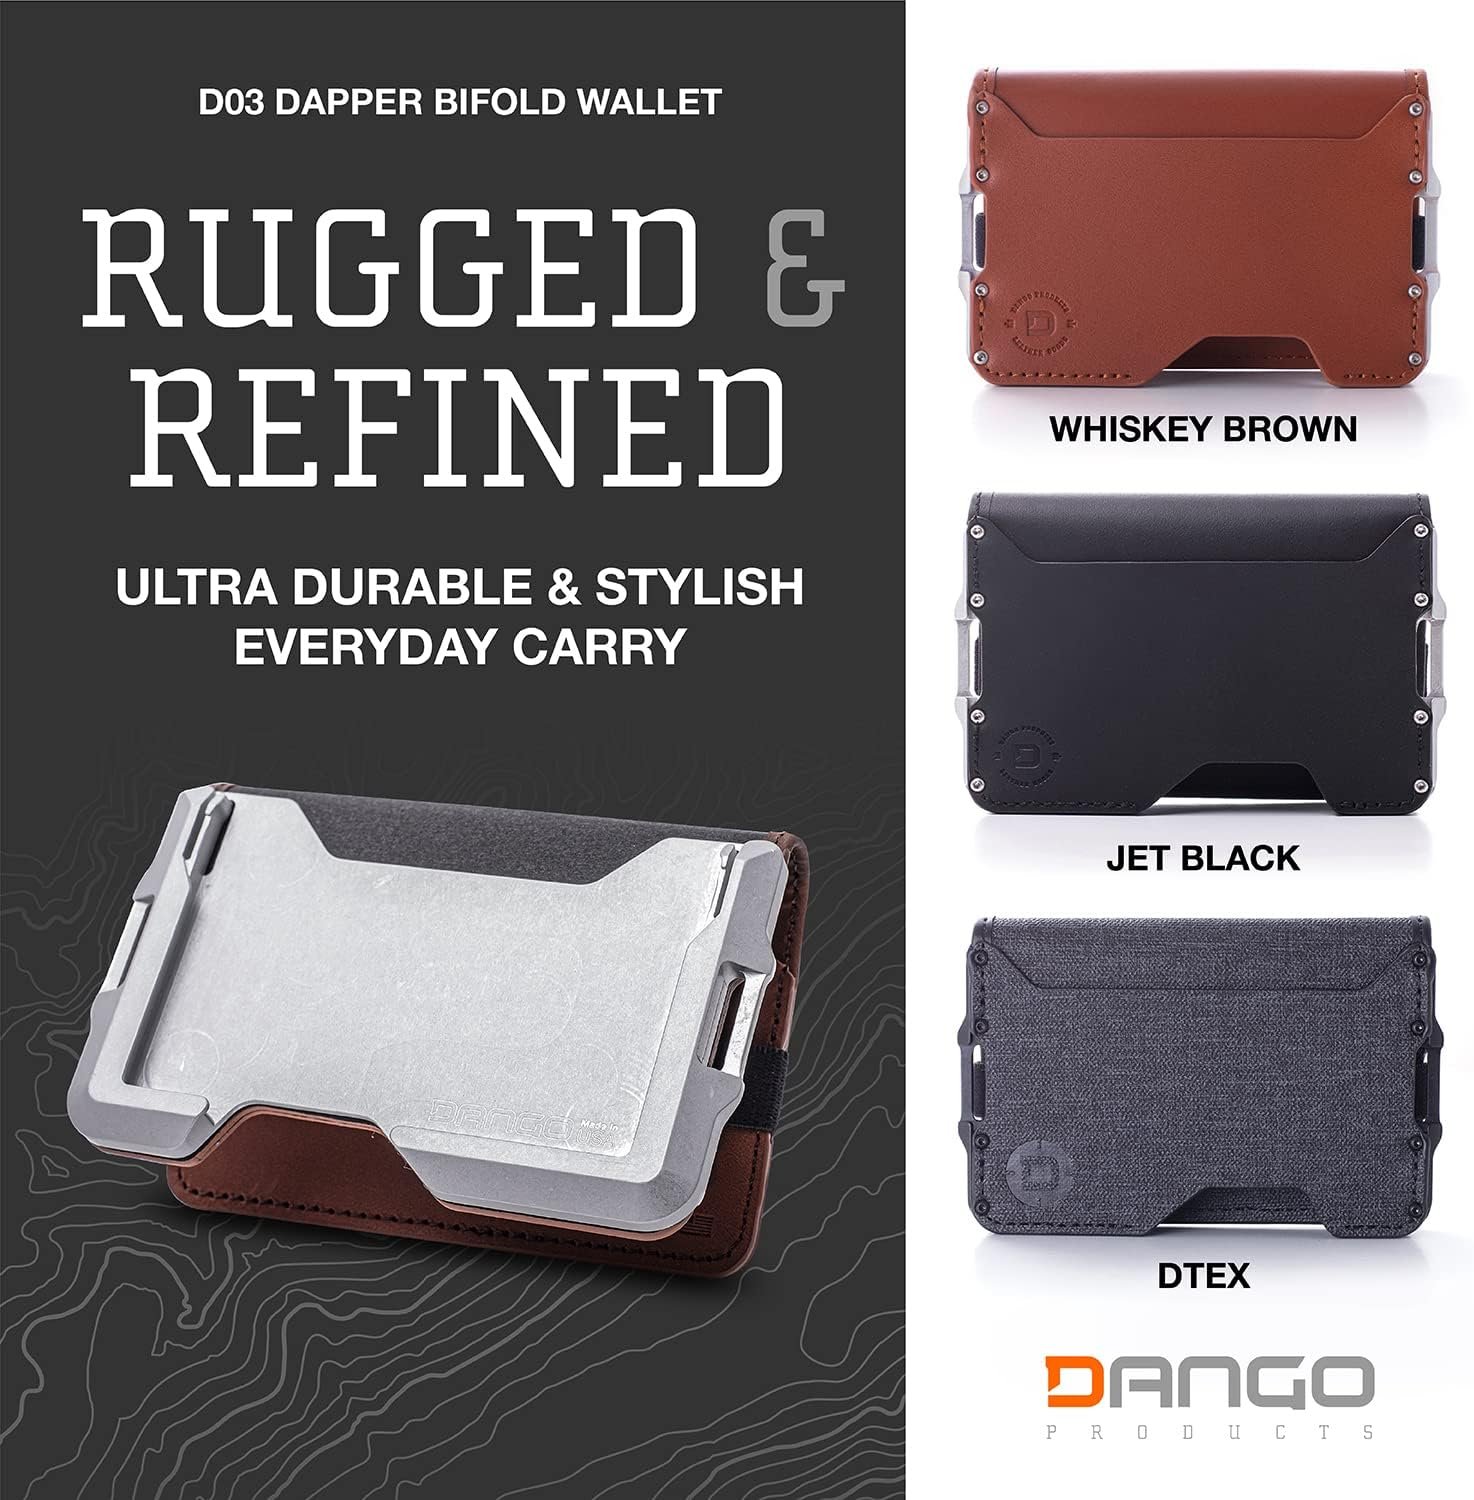 Dango Slim Minimalist Wallet Review